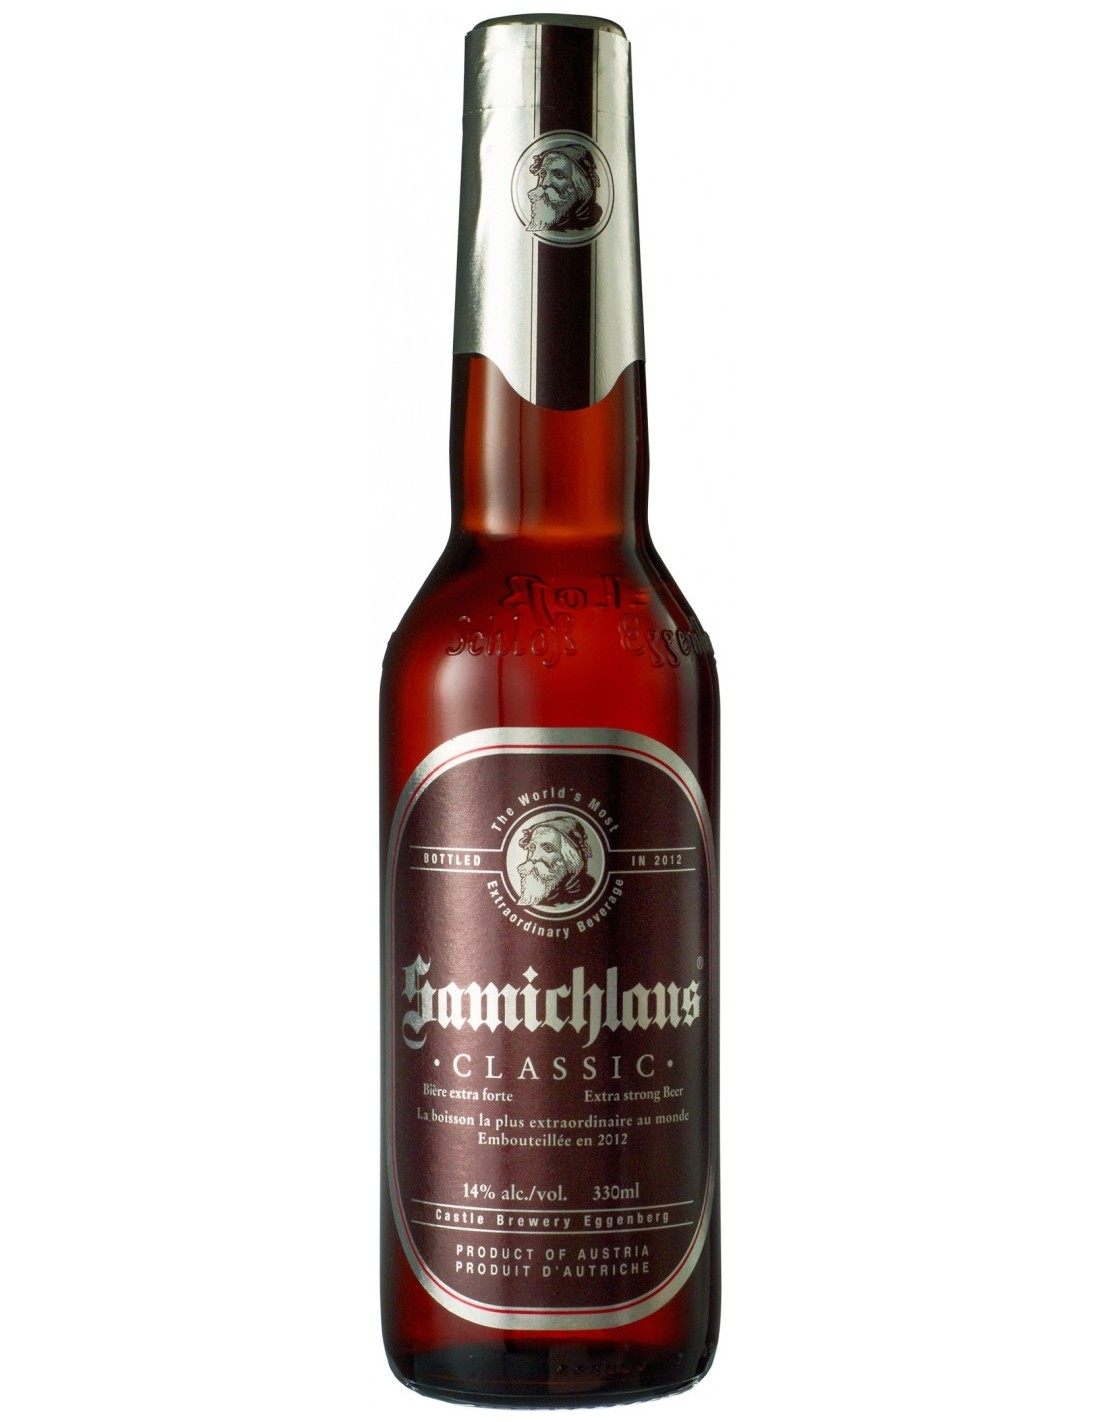 Bere bruna, filtrata Samichlaus, 14% alc., 0.33L, Germania alcooldiscount.ro